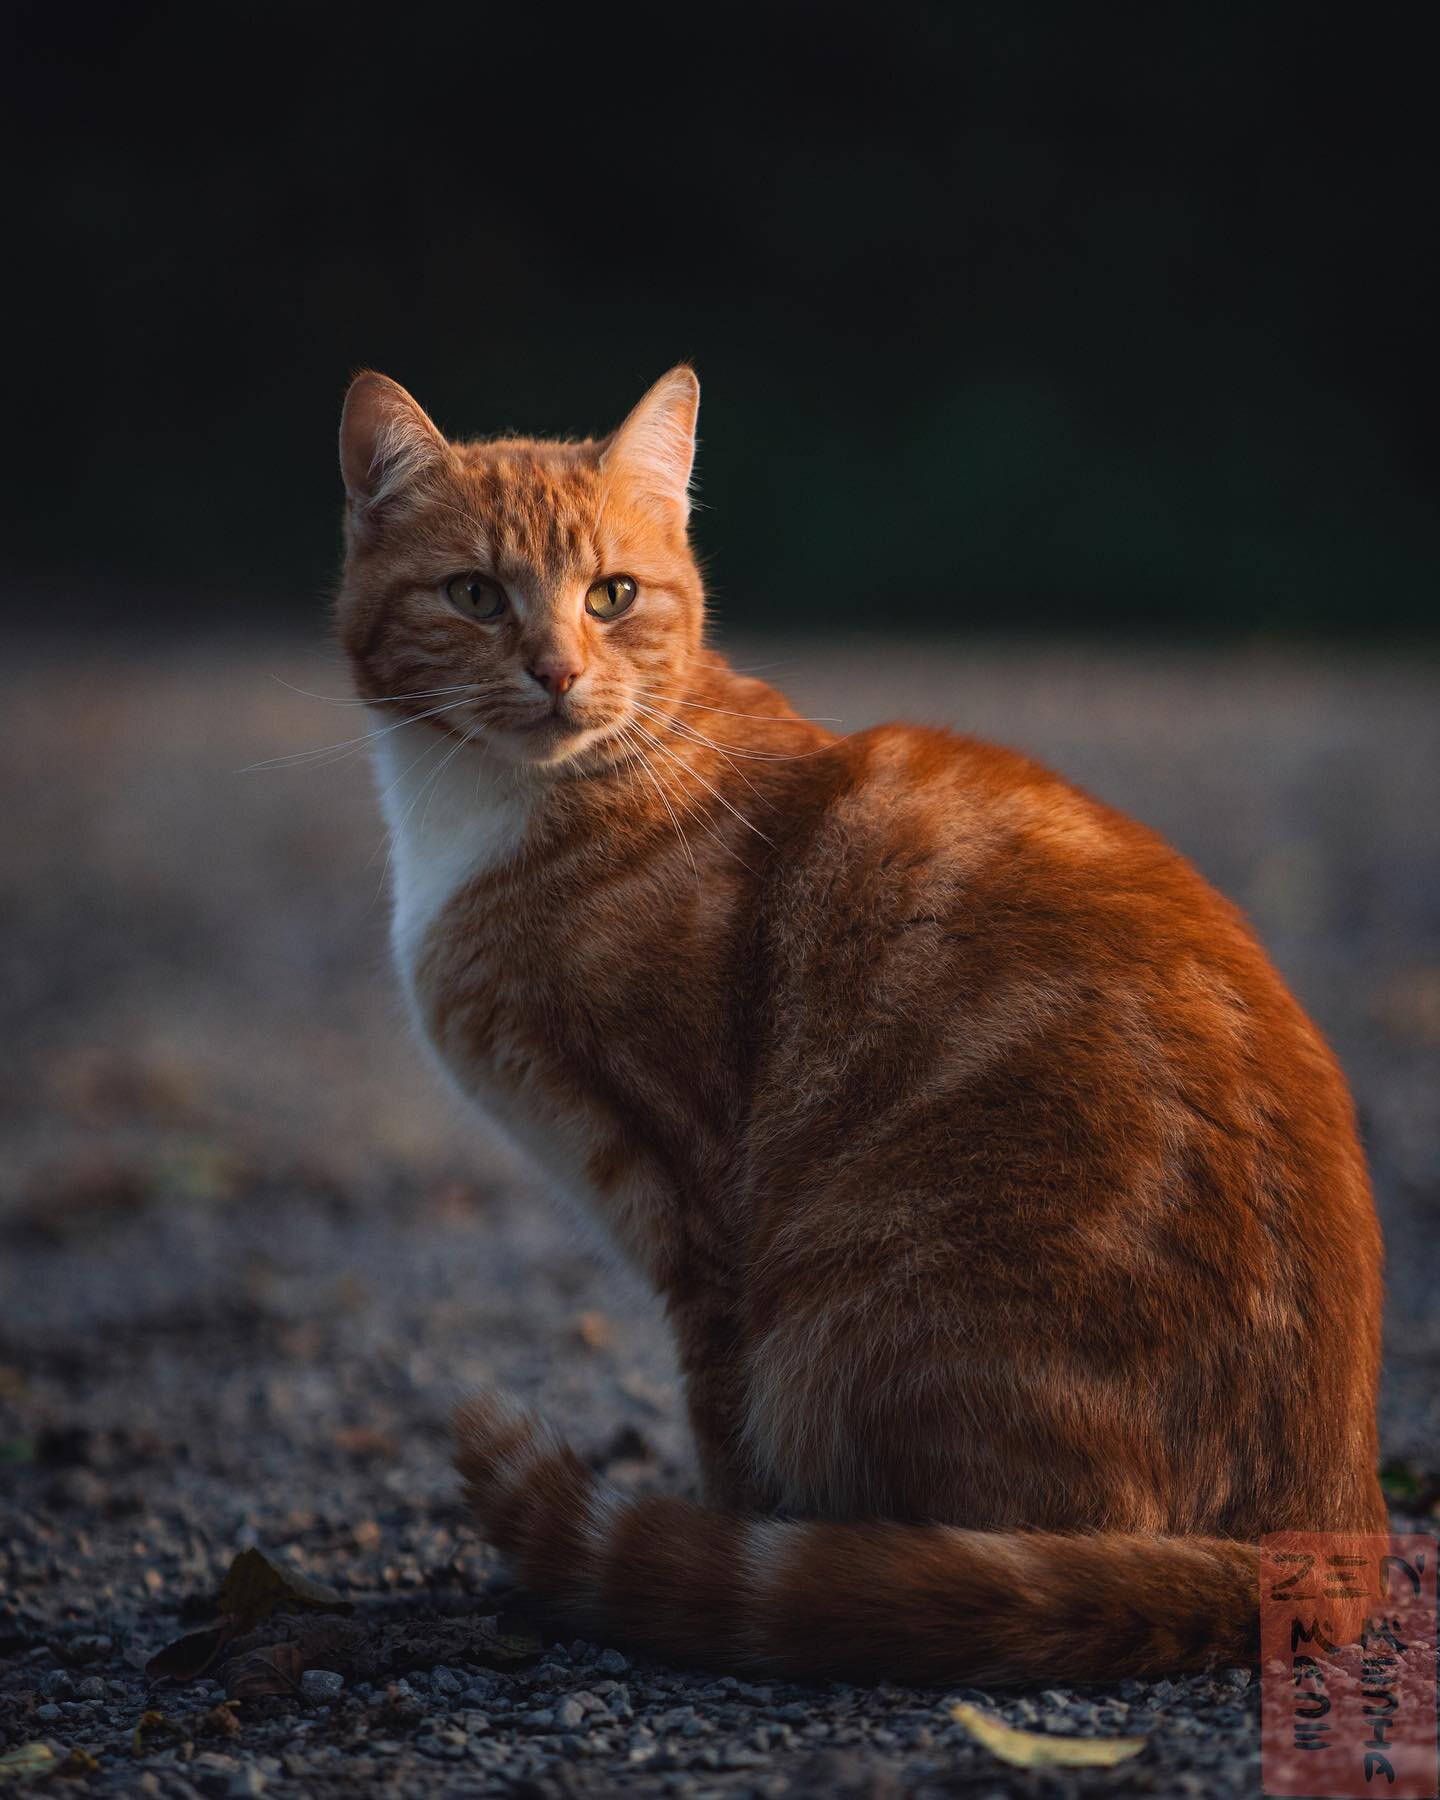 Matching sunset.
*
#sunsetcat #catmodel #igcats #orangecats #catgram #oslogram #catportraits #mittoslo #oslobilder #sonyalphaanimalportrait #sonyalpha #scandinavianphoto_no #animalportraits #zenmademedia